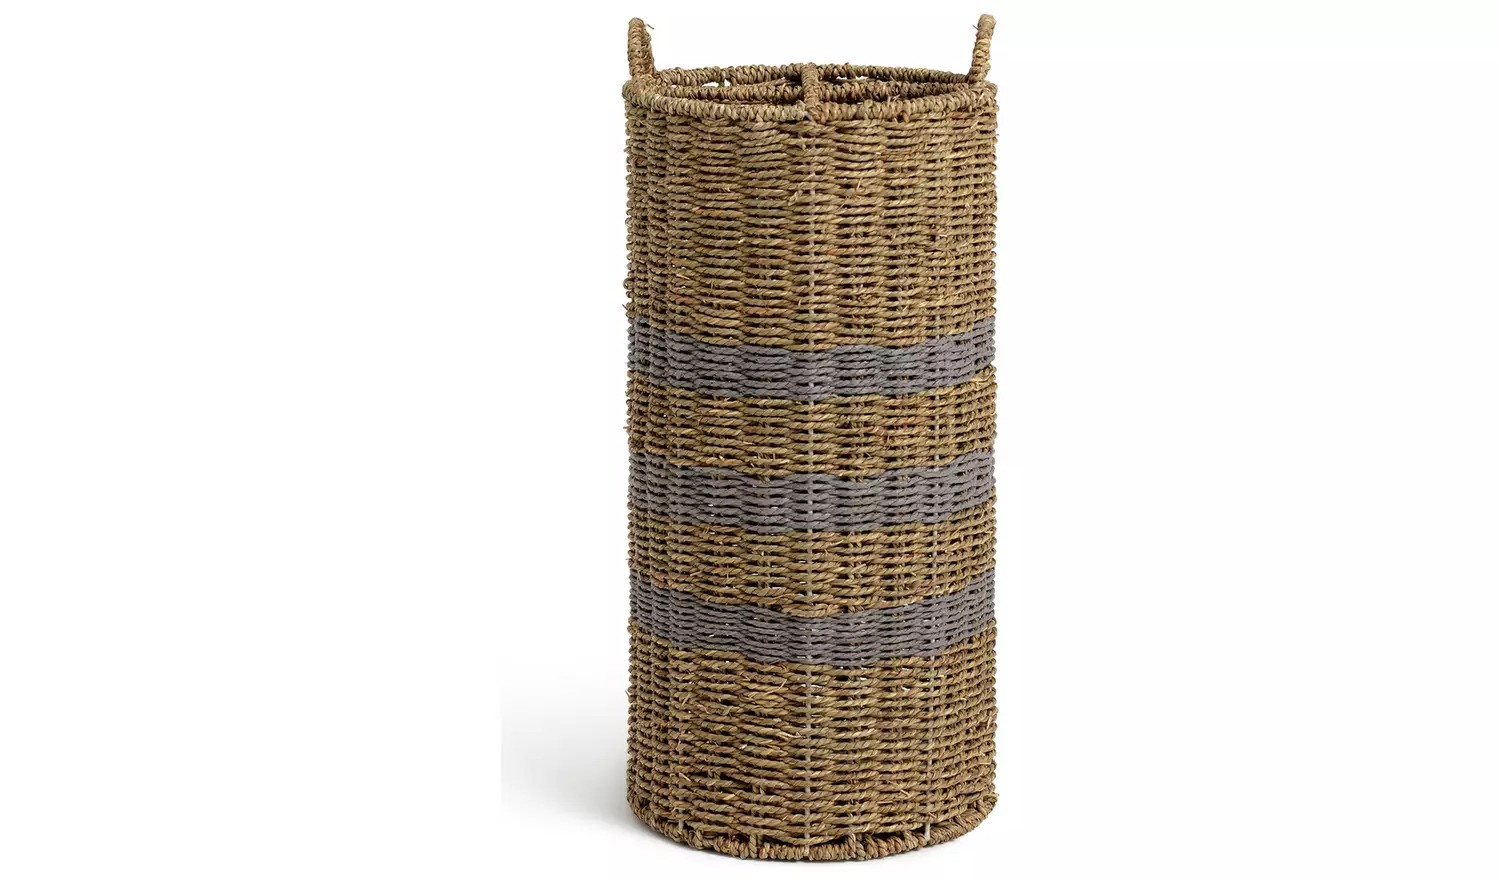 Seagrass Umbrella Basket